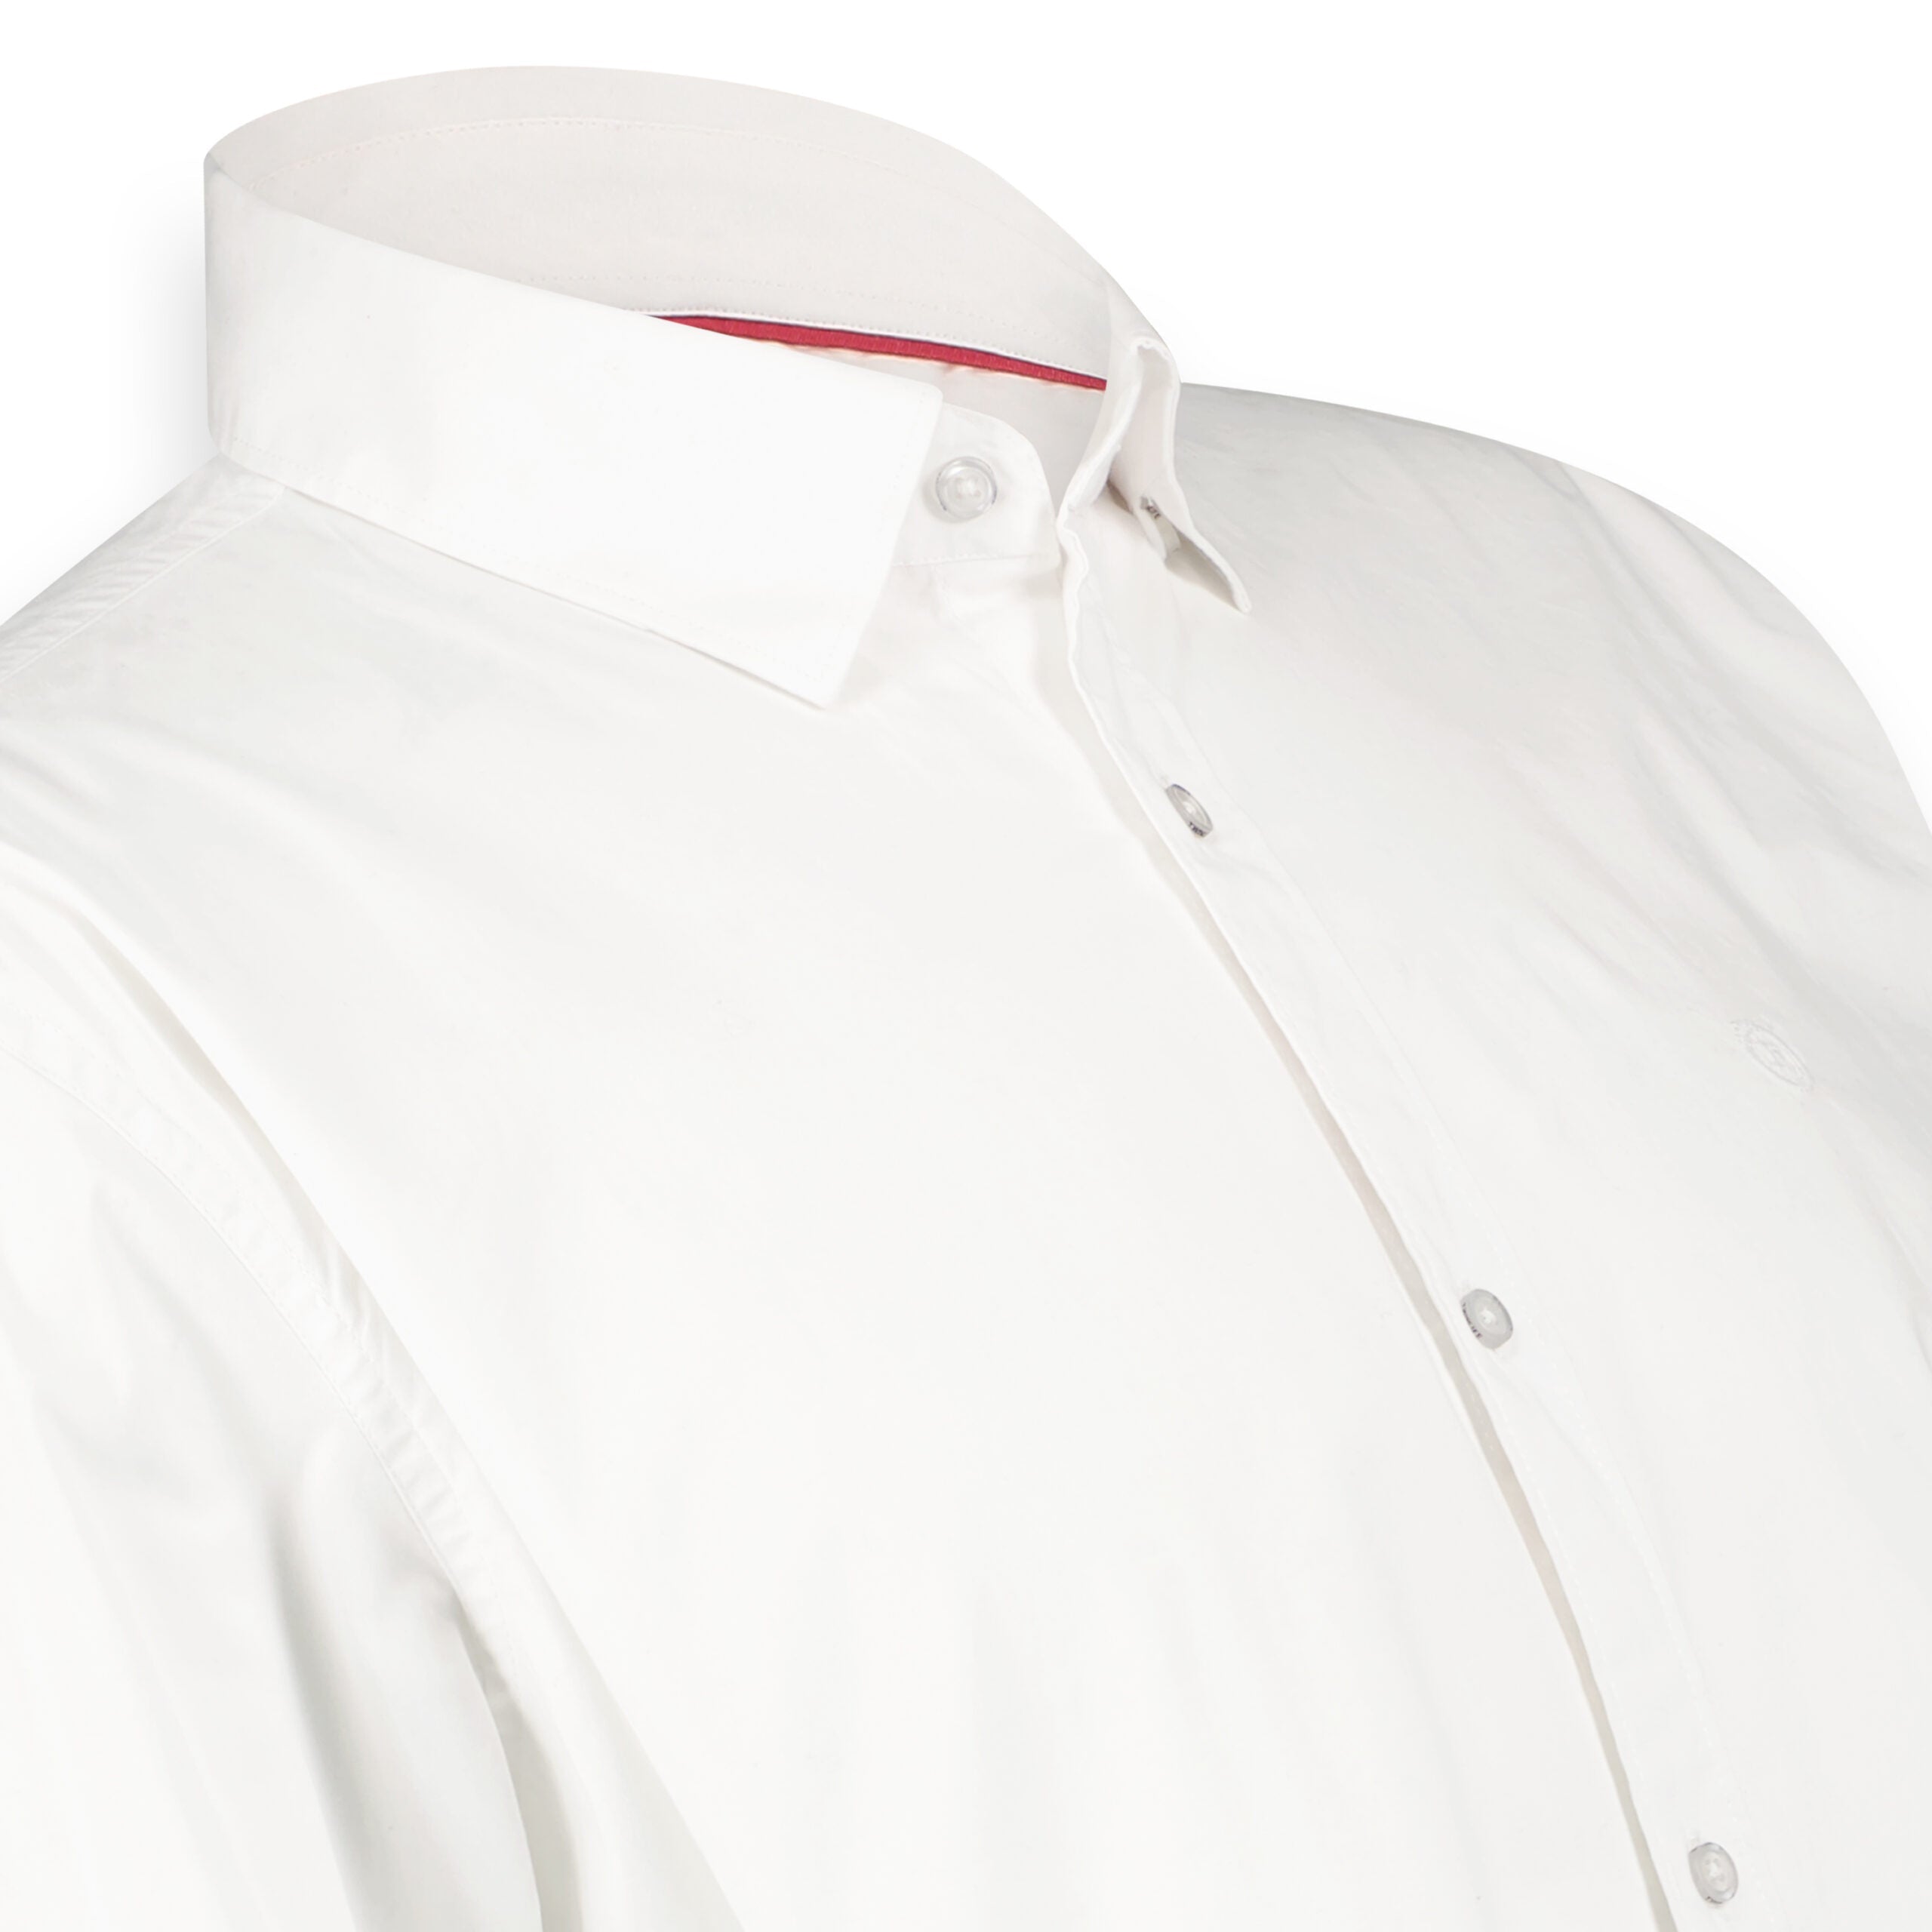 Men Shirt Essential | White